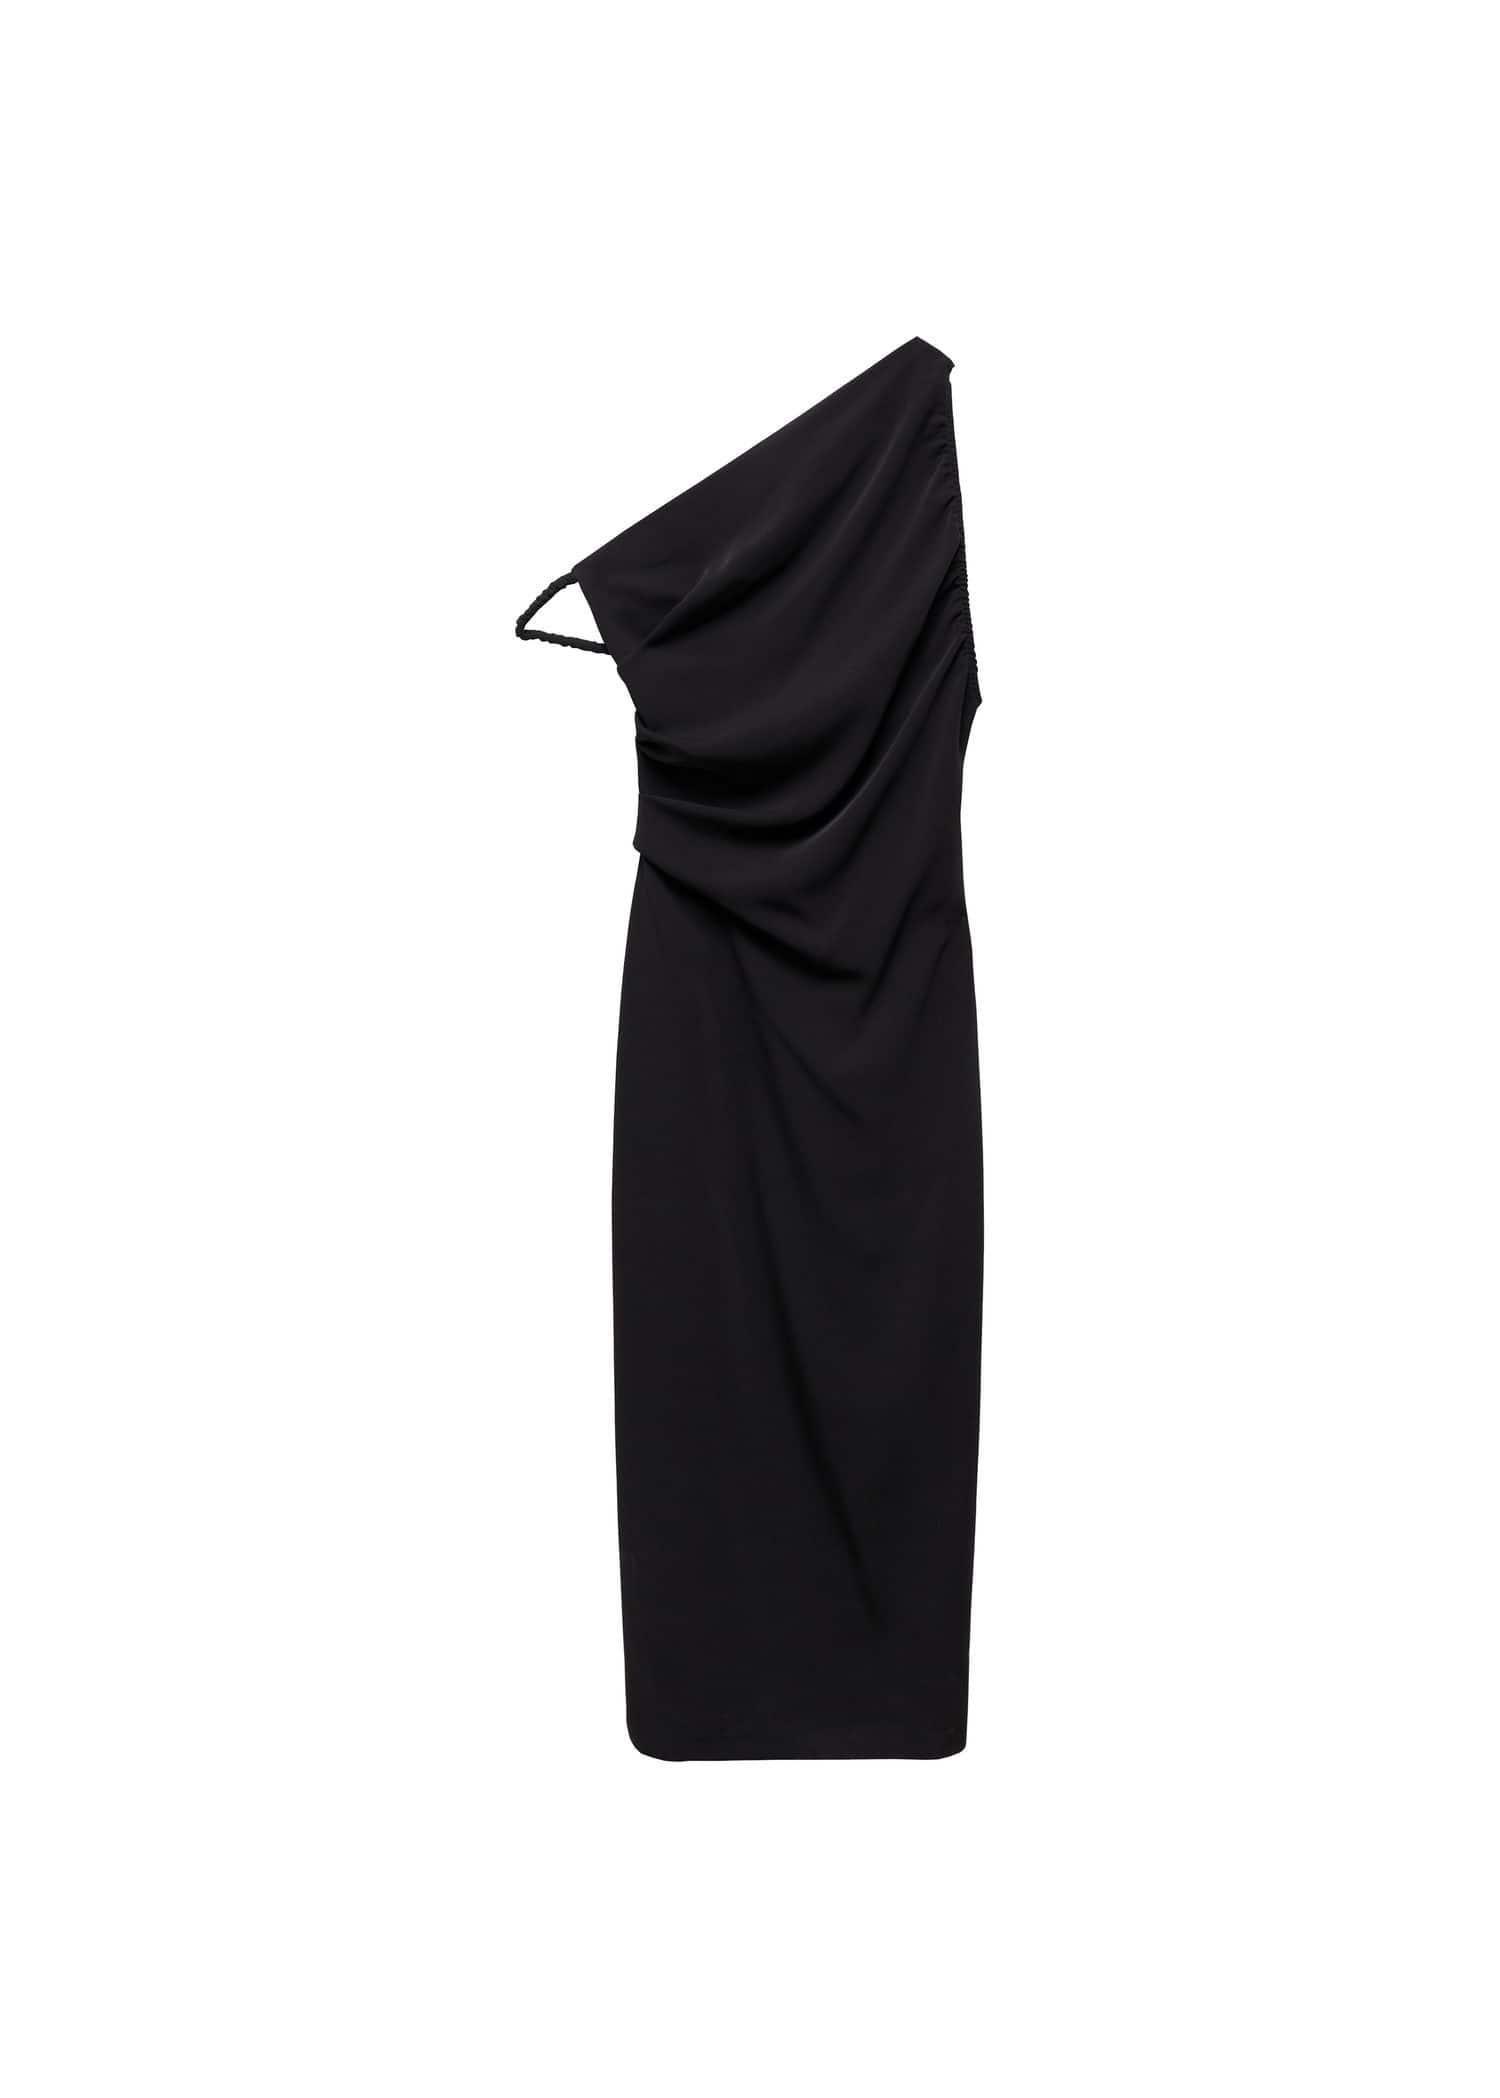 Mango - Black Asymmetric Neckline Dress